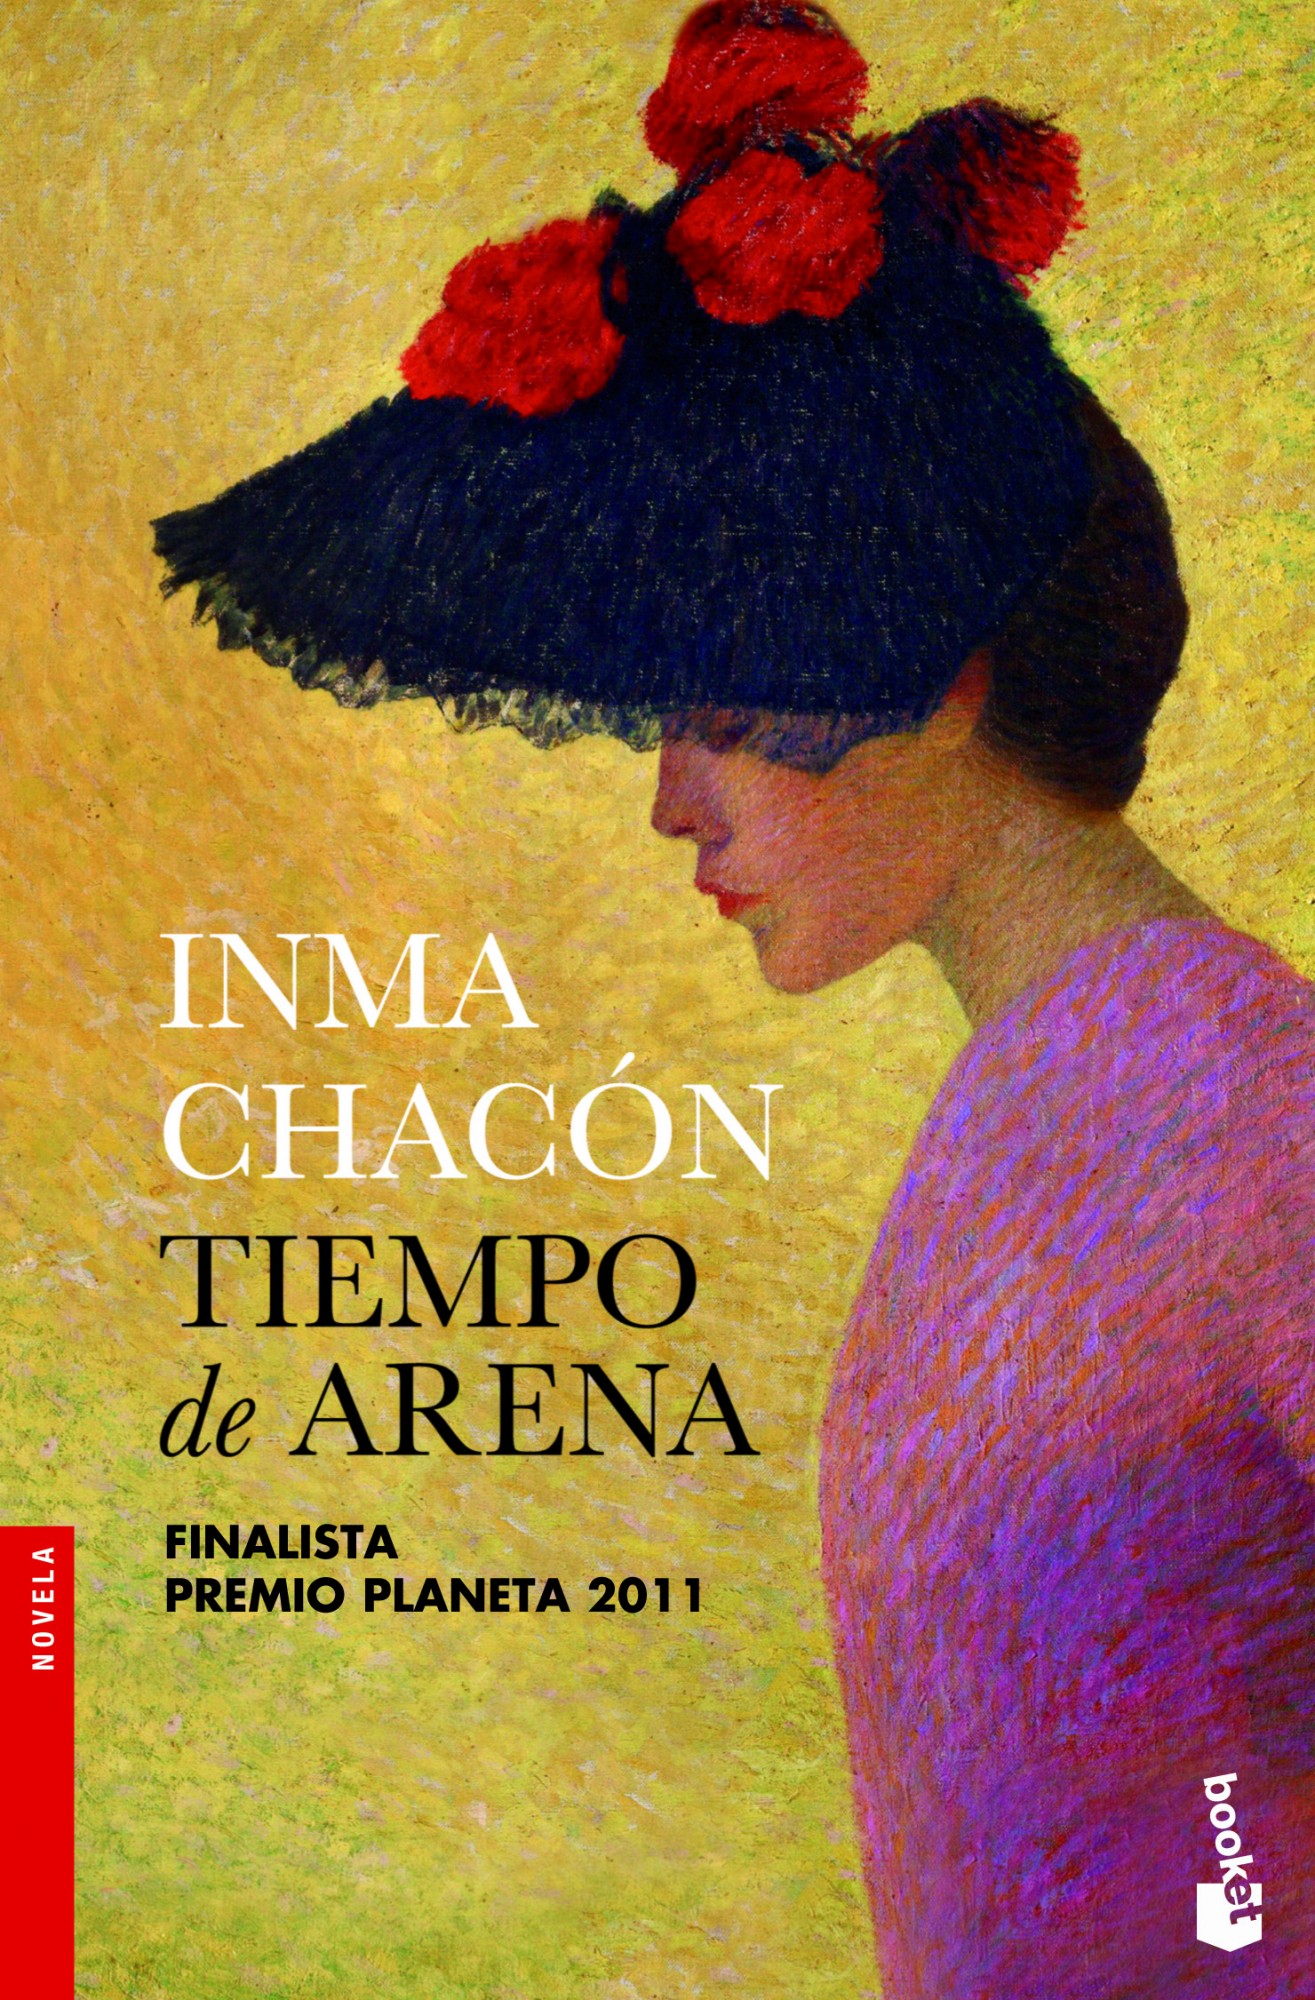 Tiempo de arena "Finalista Premio Planeta 2011"